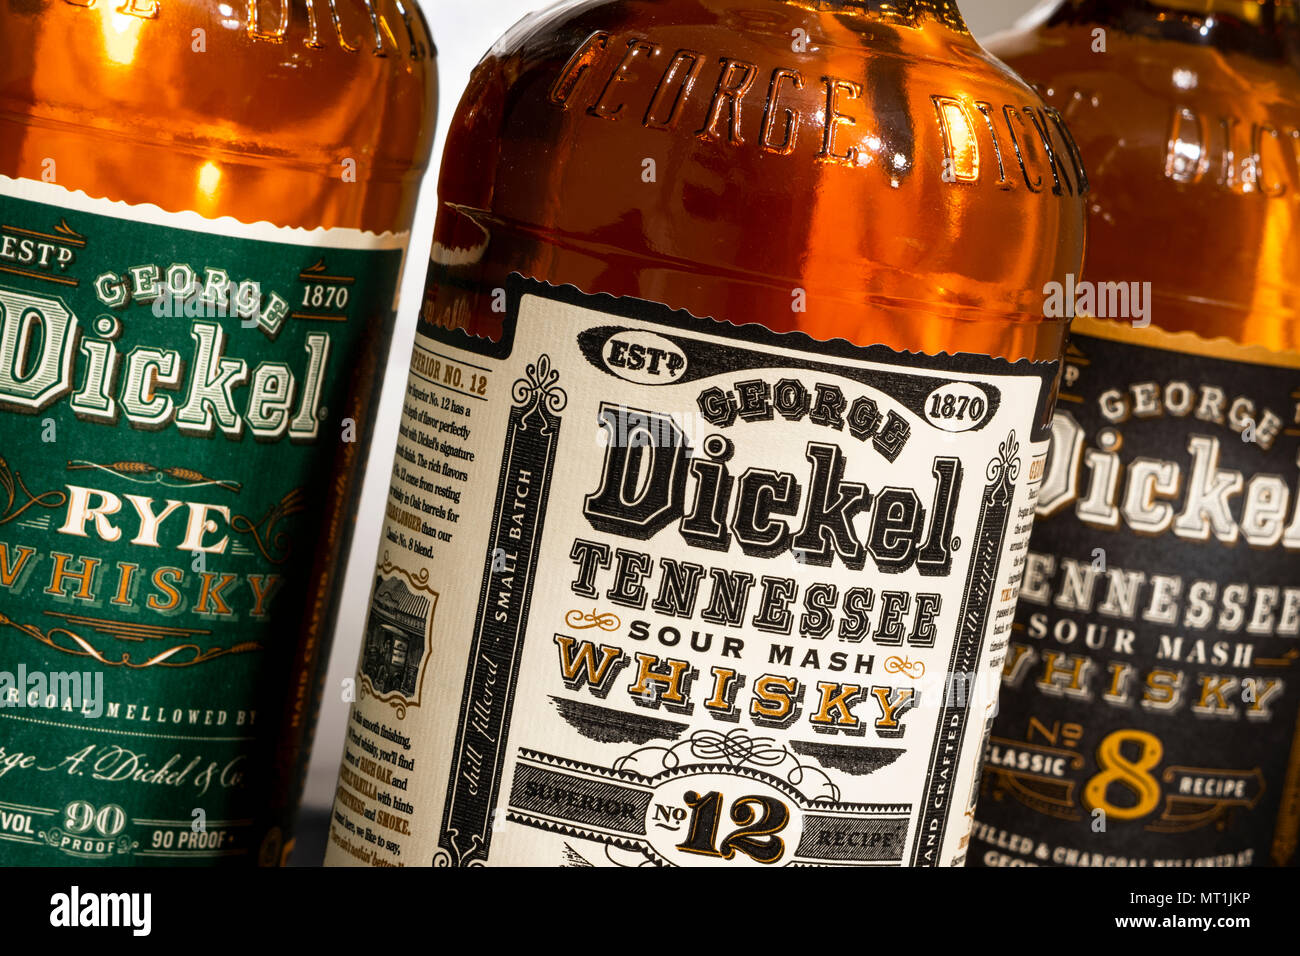 Three bottles of George Dickel whisky Stock Photo